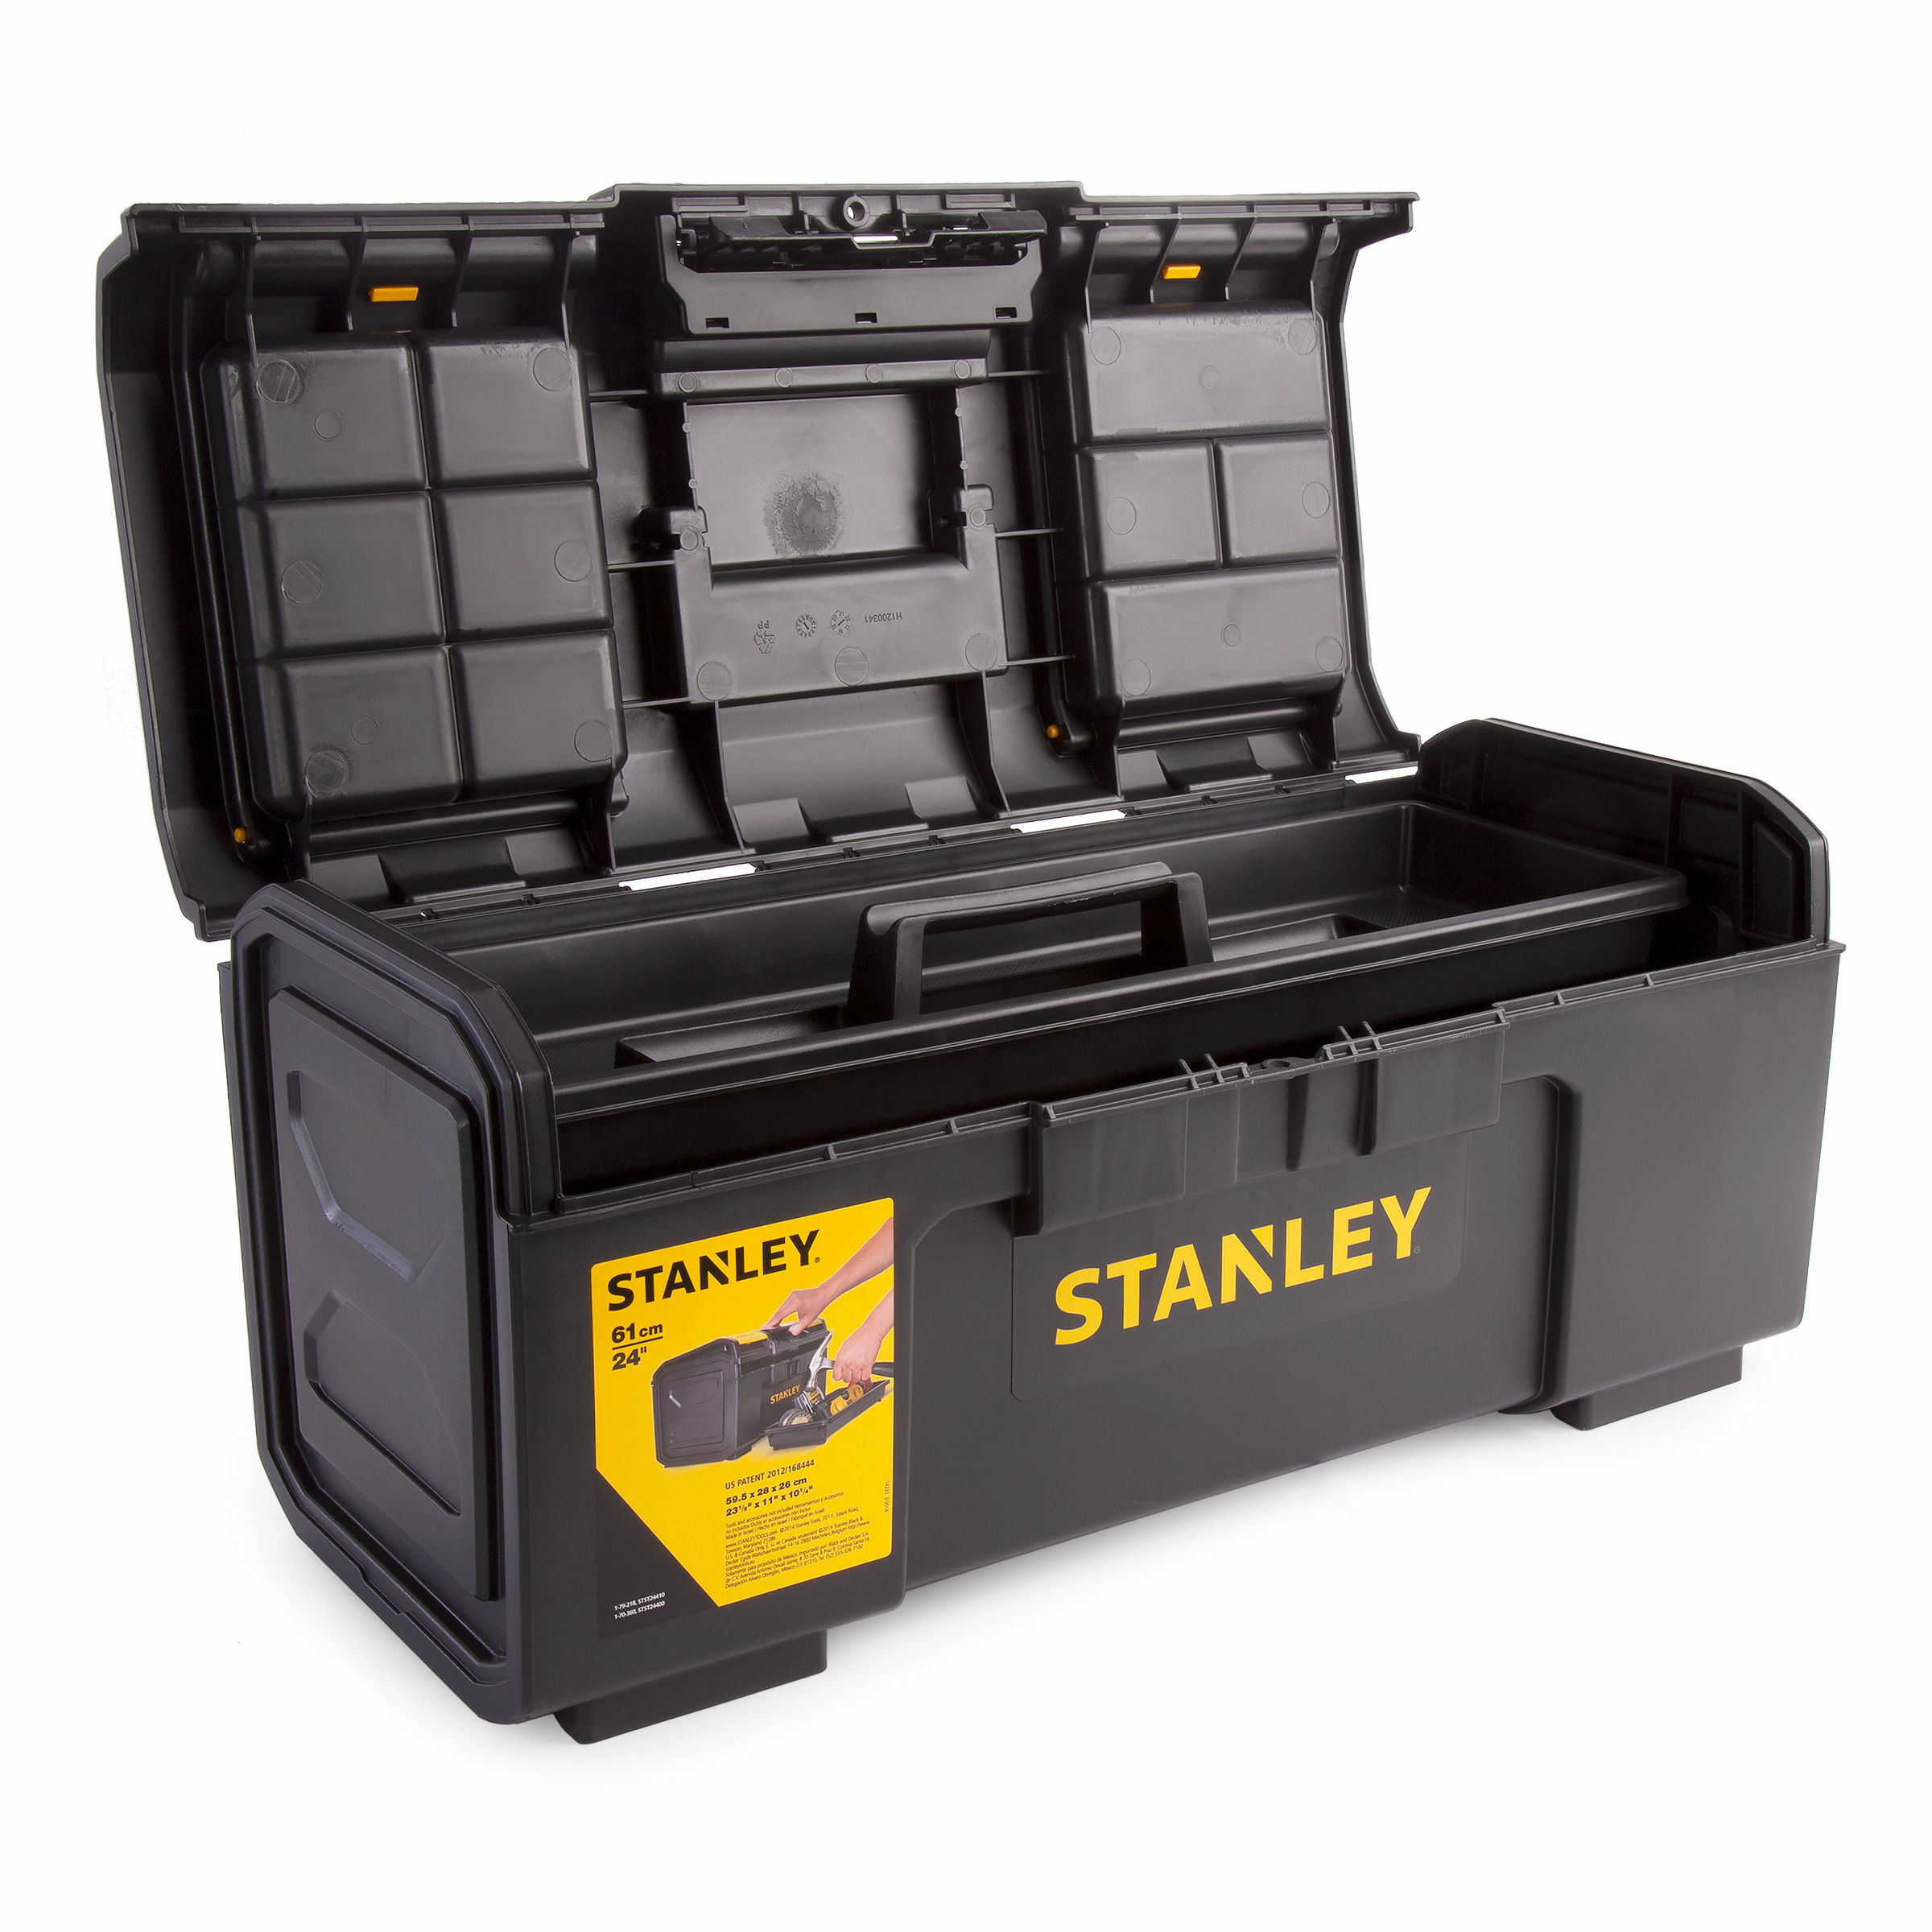 Basic Toolbox 24" Stanley - 2